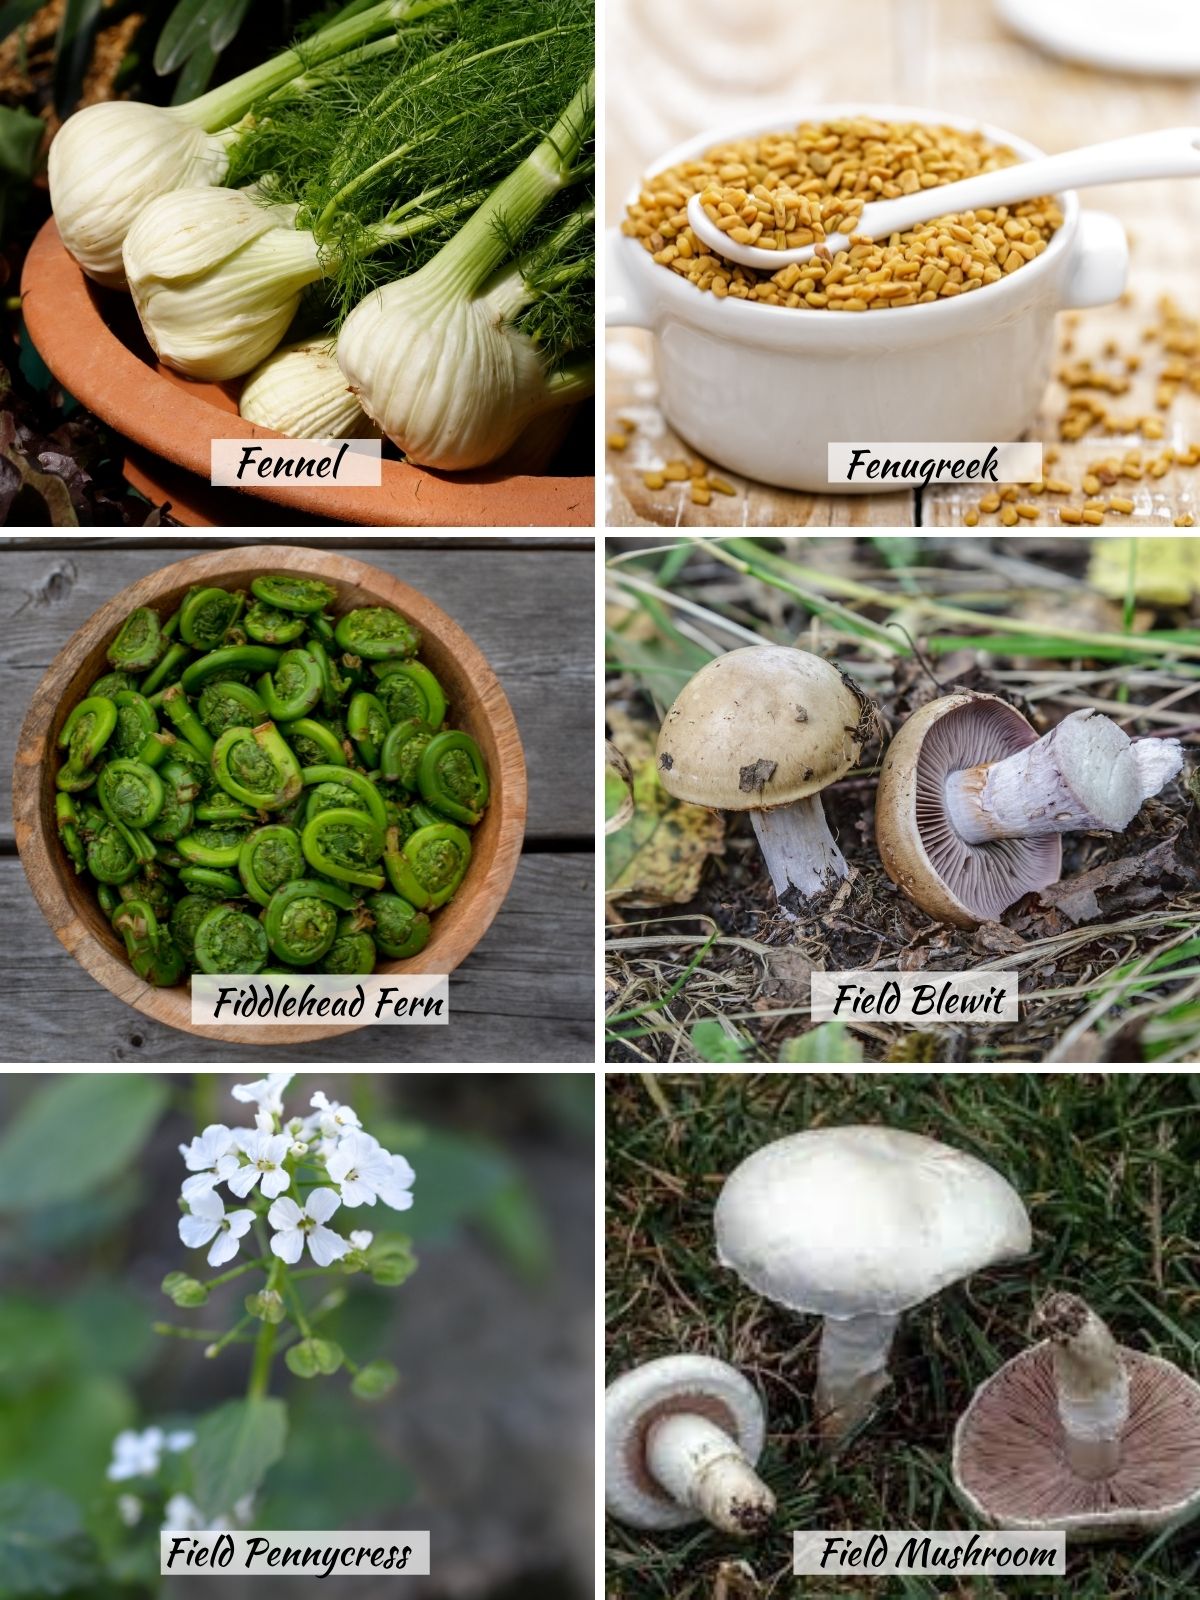 Assorted vegetables that start with the letter F, fennel, fenugreek, fern, filed mushrooms, field cress, field mushroom field blewit.